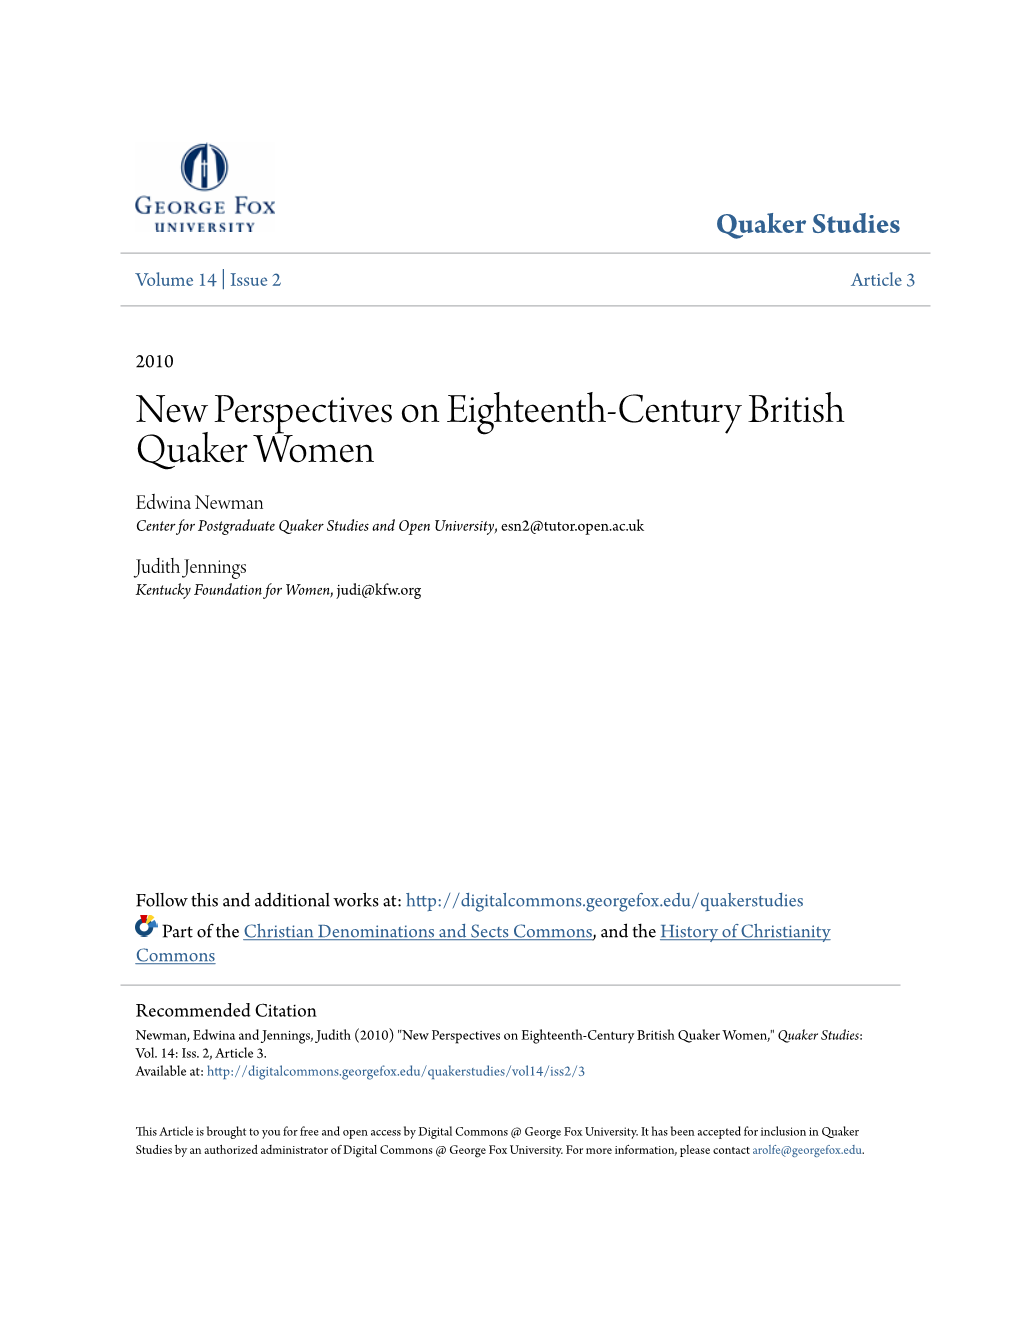 New Perspectives on Eighteenth-Century British Quaker Women Edwina Newman Center for Postgraduate Quaker Studies and Open University, Esn2@Tutor.Open.Ac.Uk